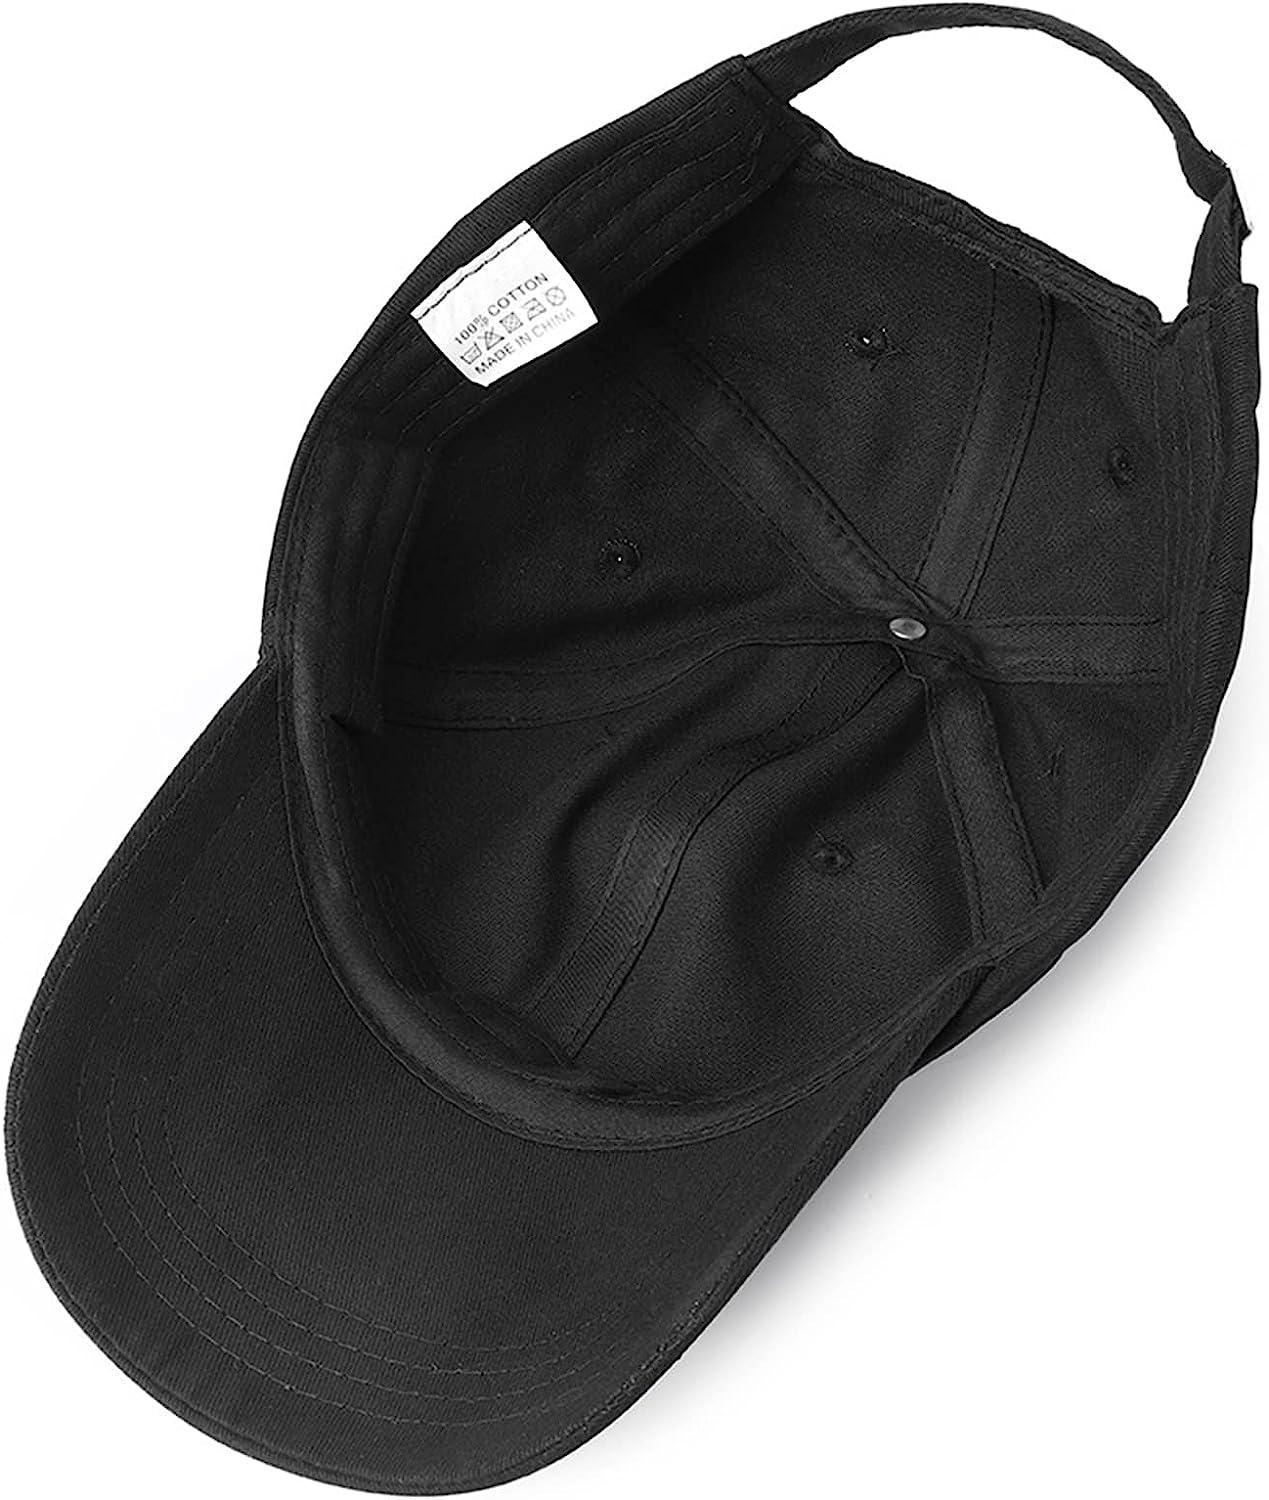 Golf cap Sport Hat Fashion Breathable Adjustable Women Balck/Grey